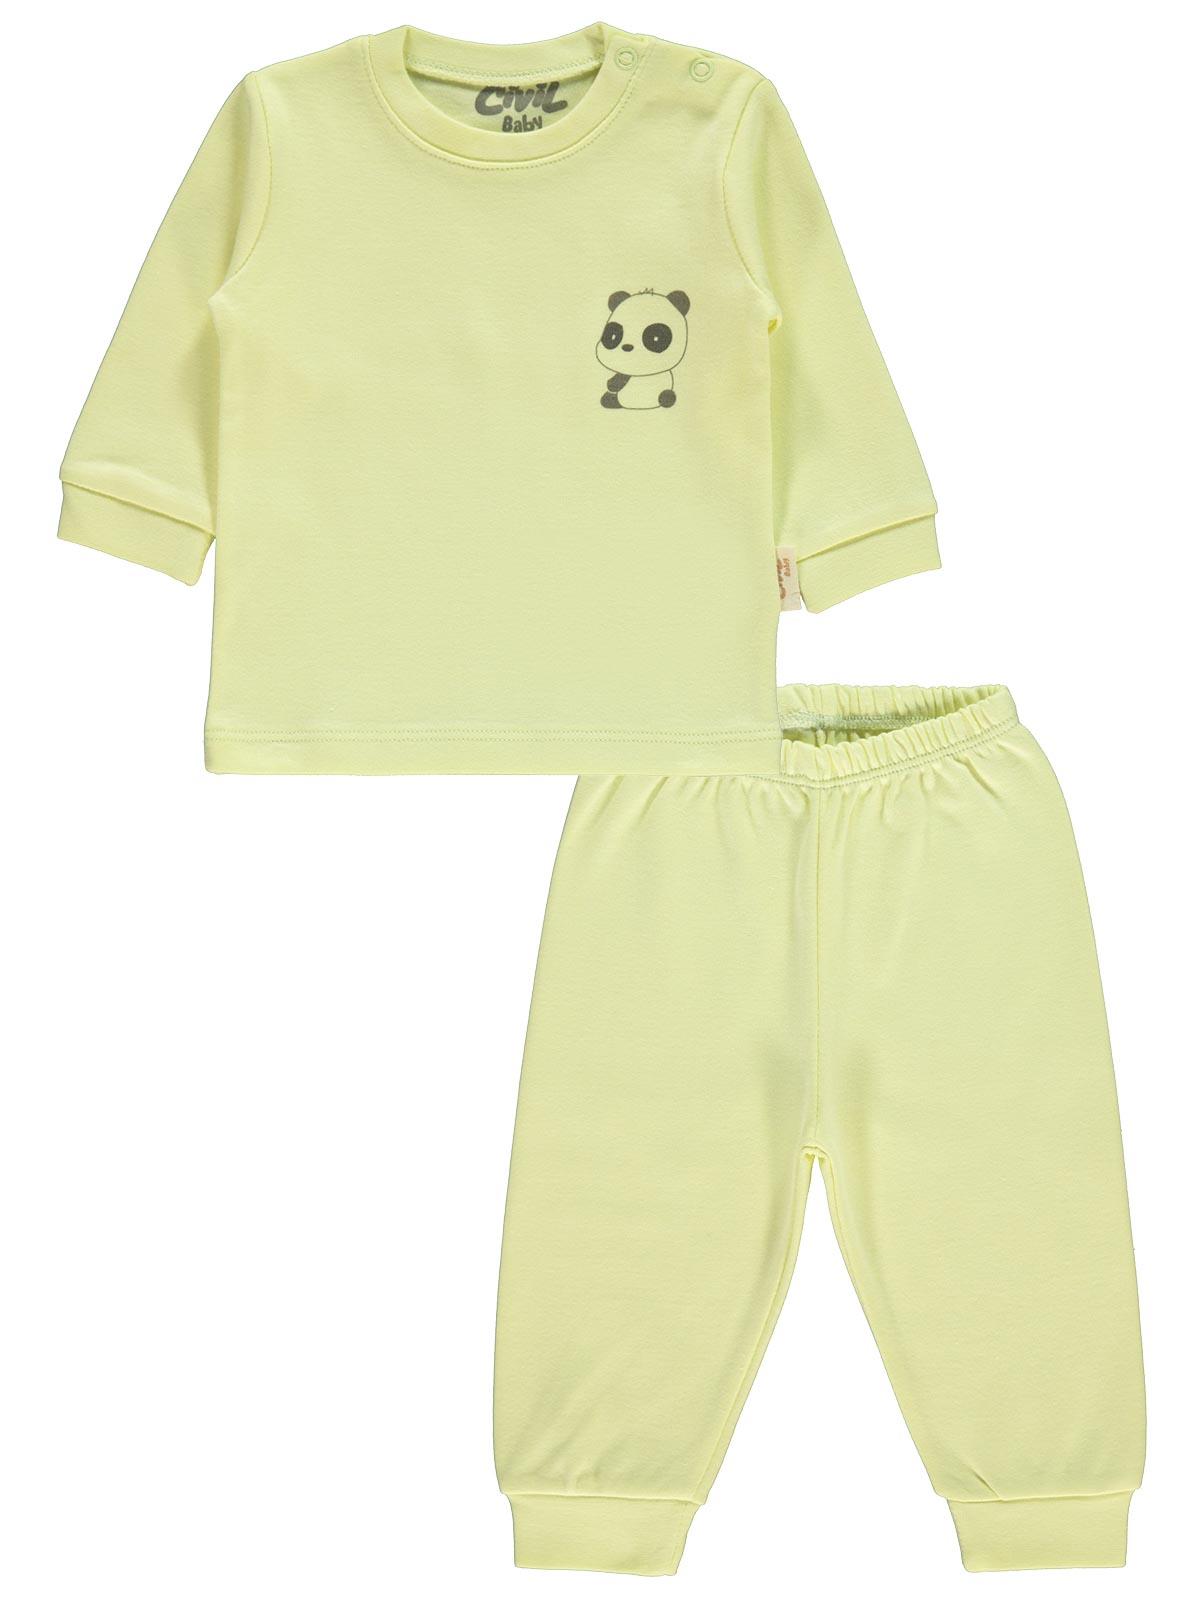 Civil Baby Organik Pijama Takımı 3-12 Ay Sarı